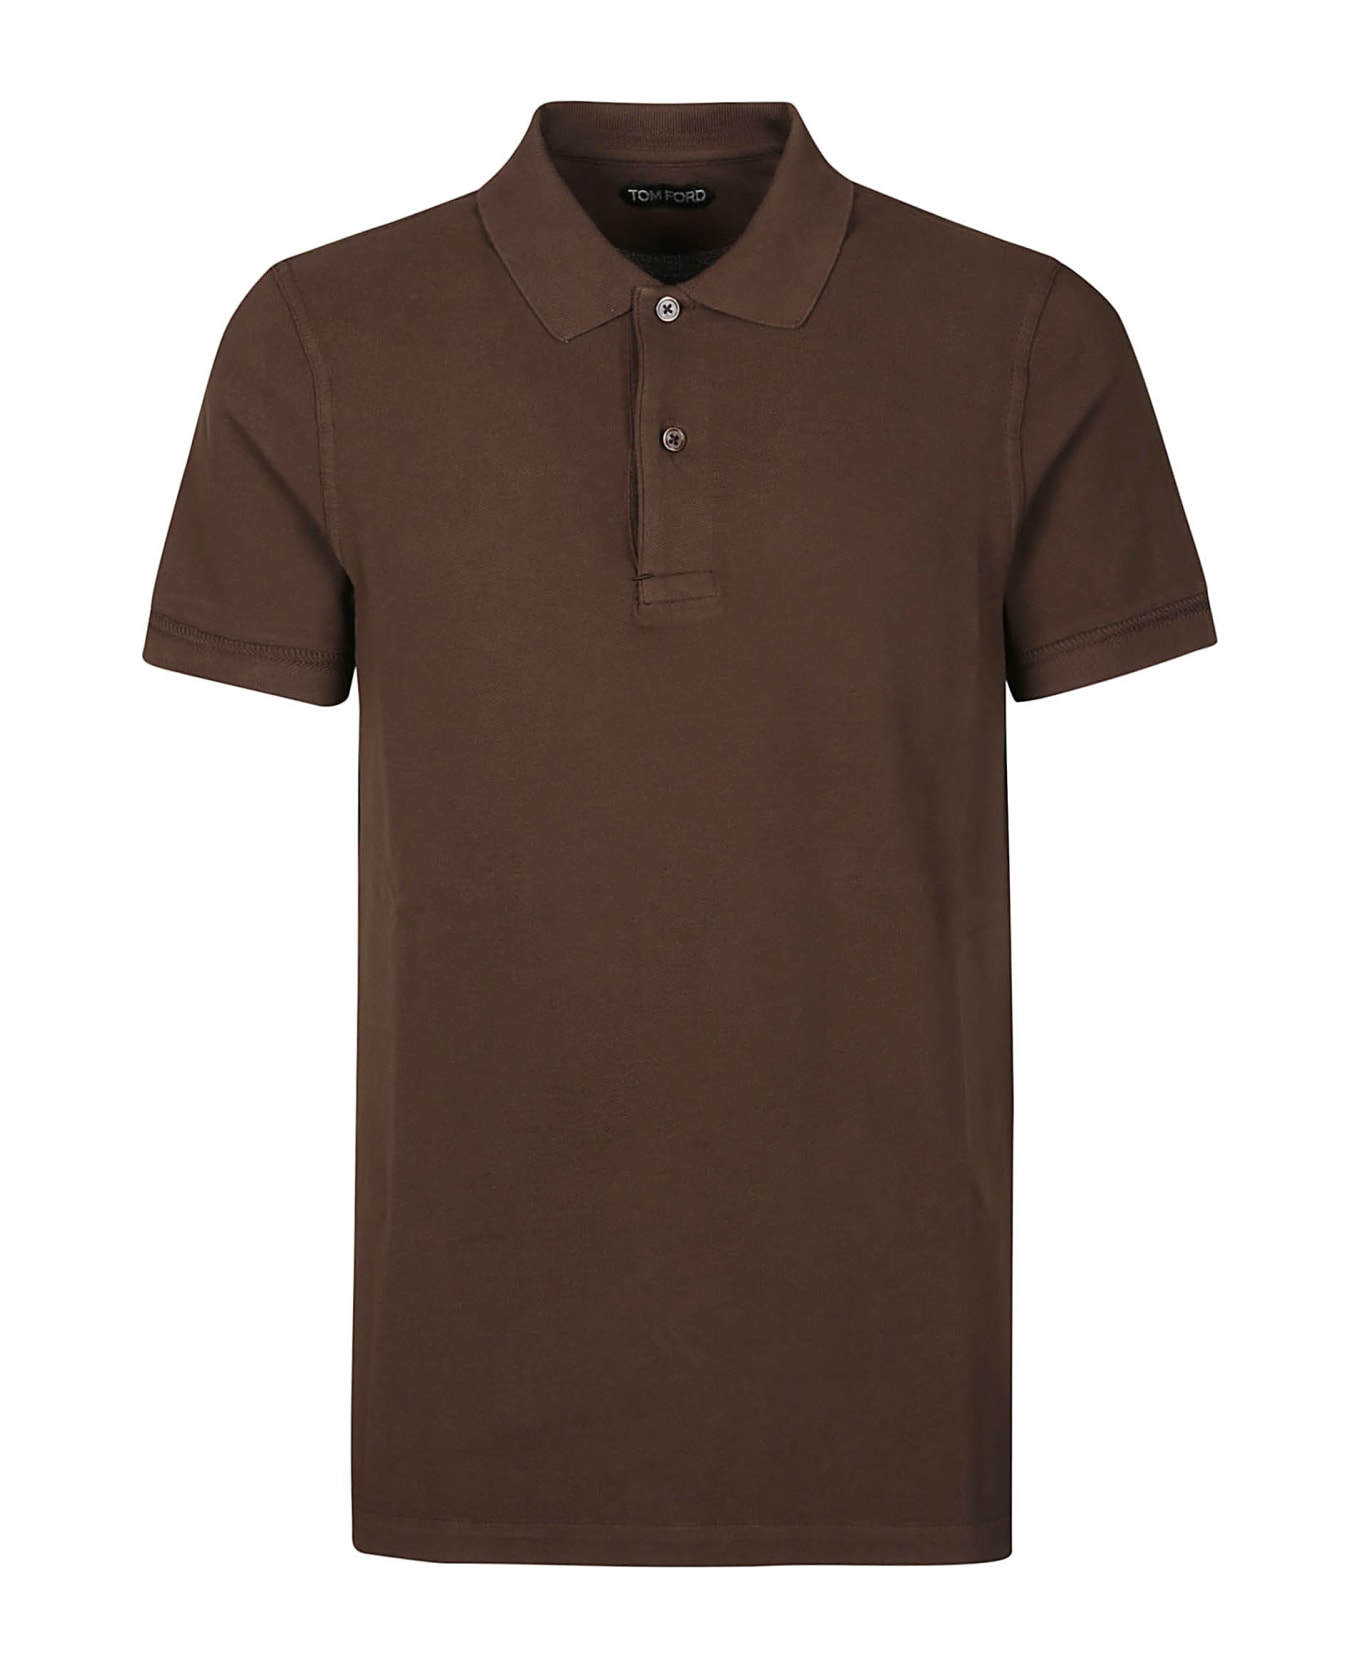 Tom Ford Tennis Piquet Short Sleeve Polo Shirt - Chocolate ポロシャツ